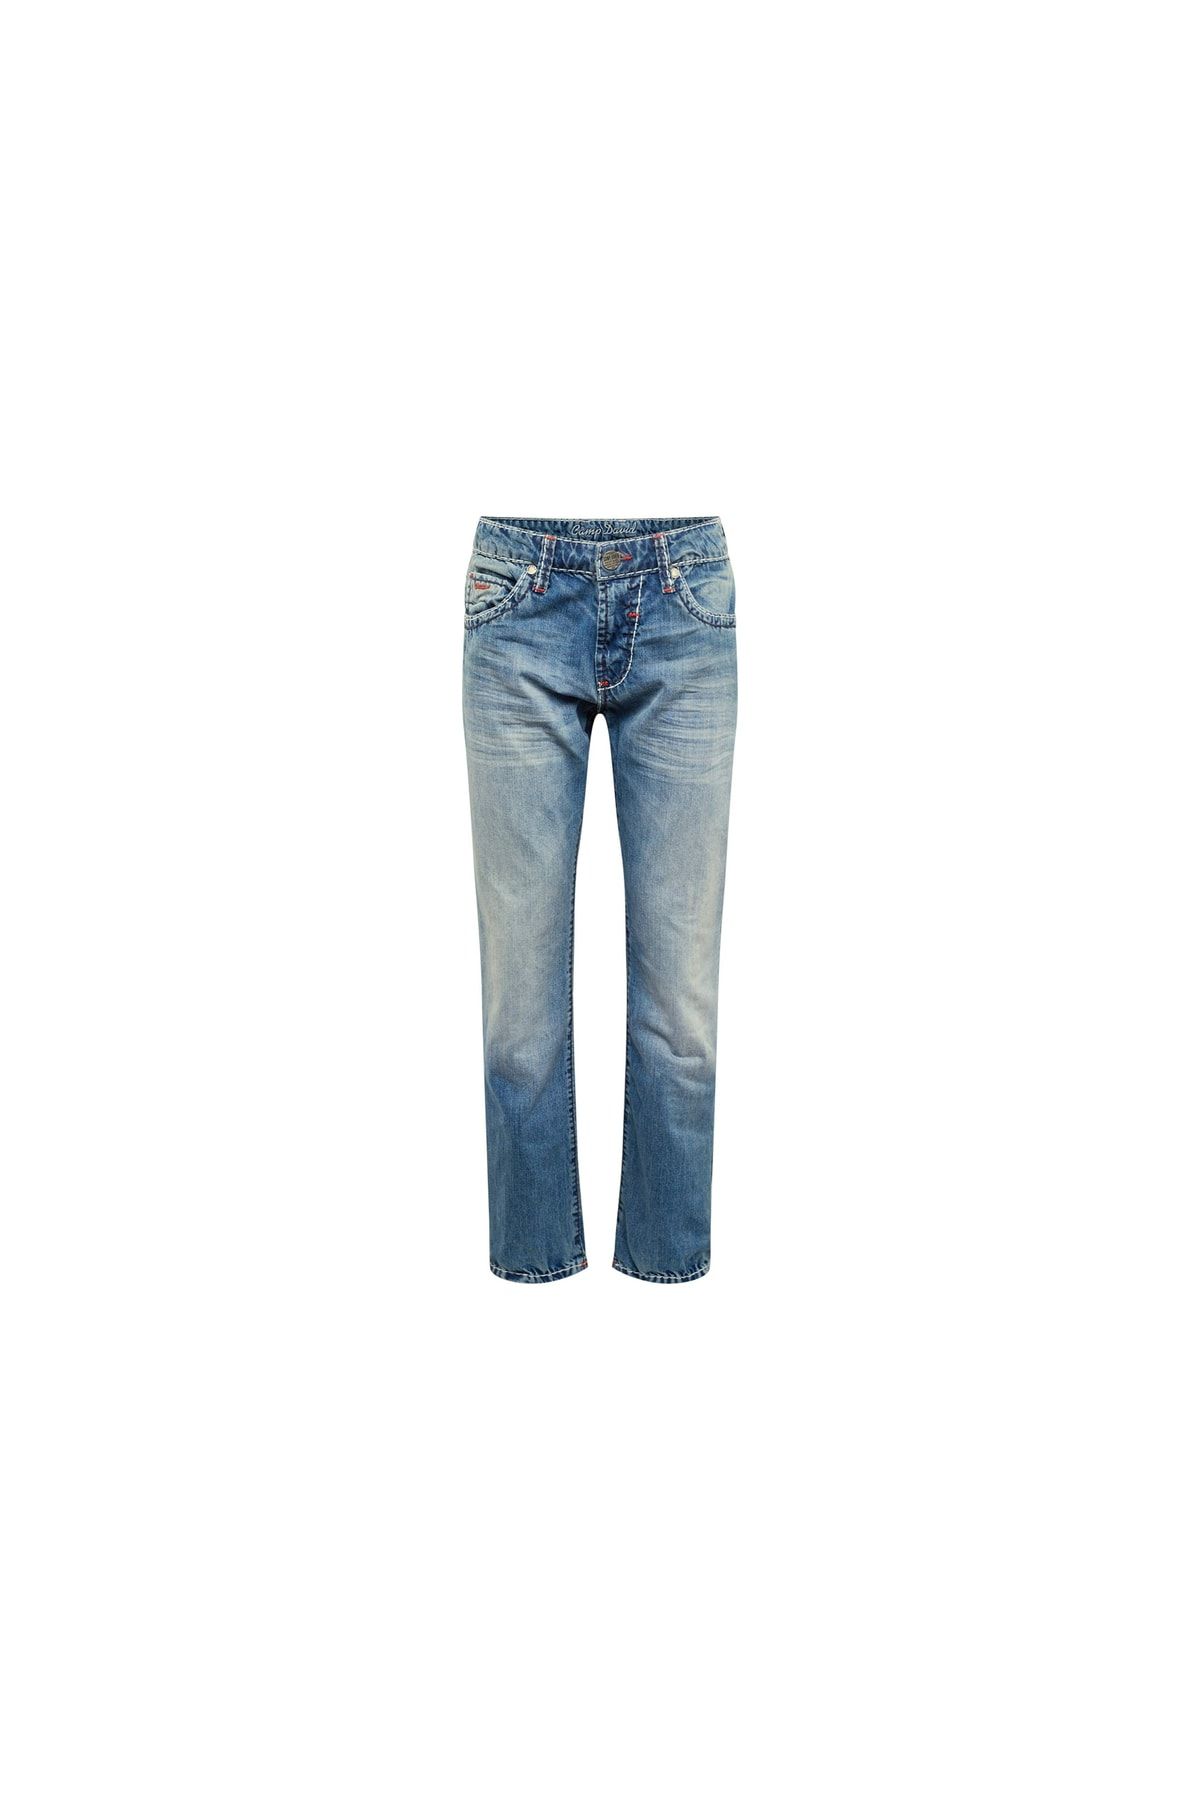 Camp David Jeans online shoppen Trendyol | Stylishe Denim–Mode –